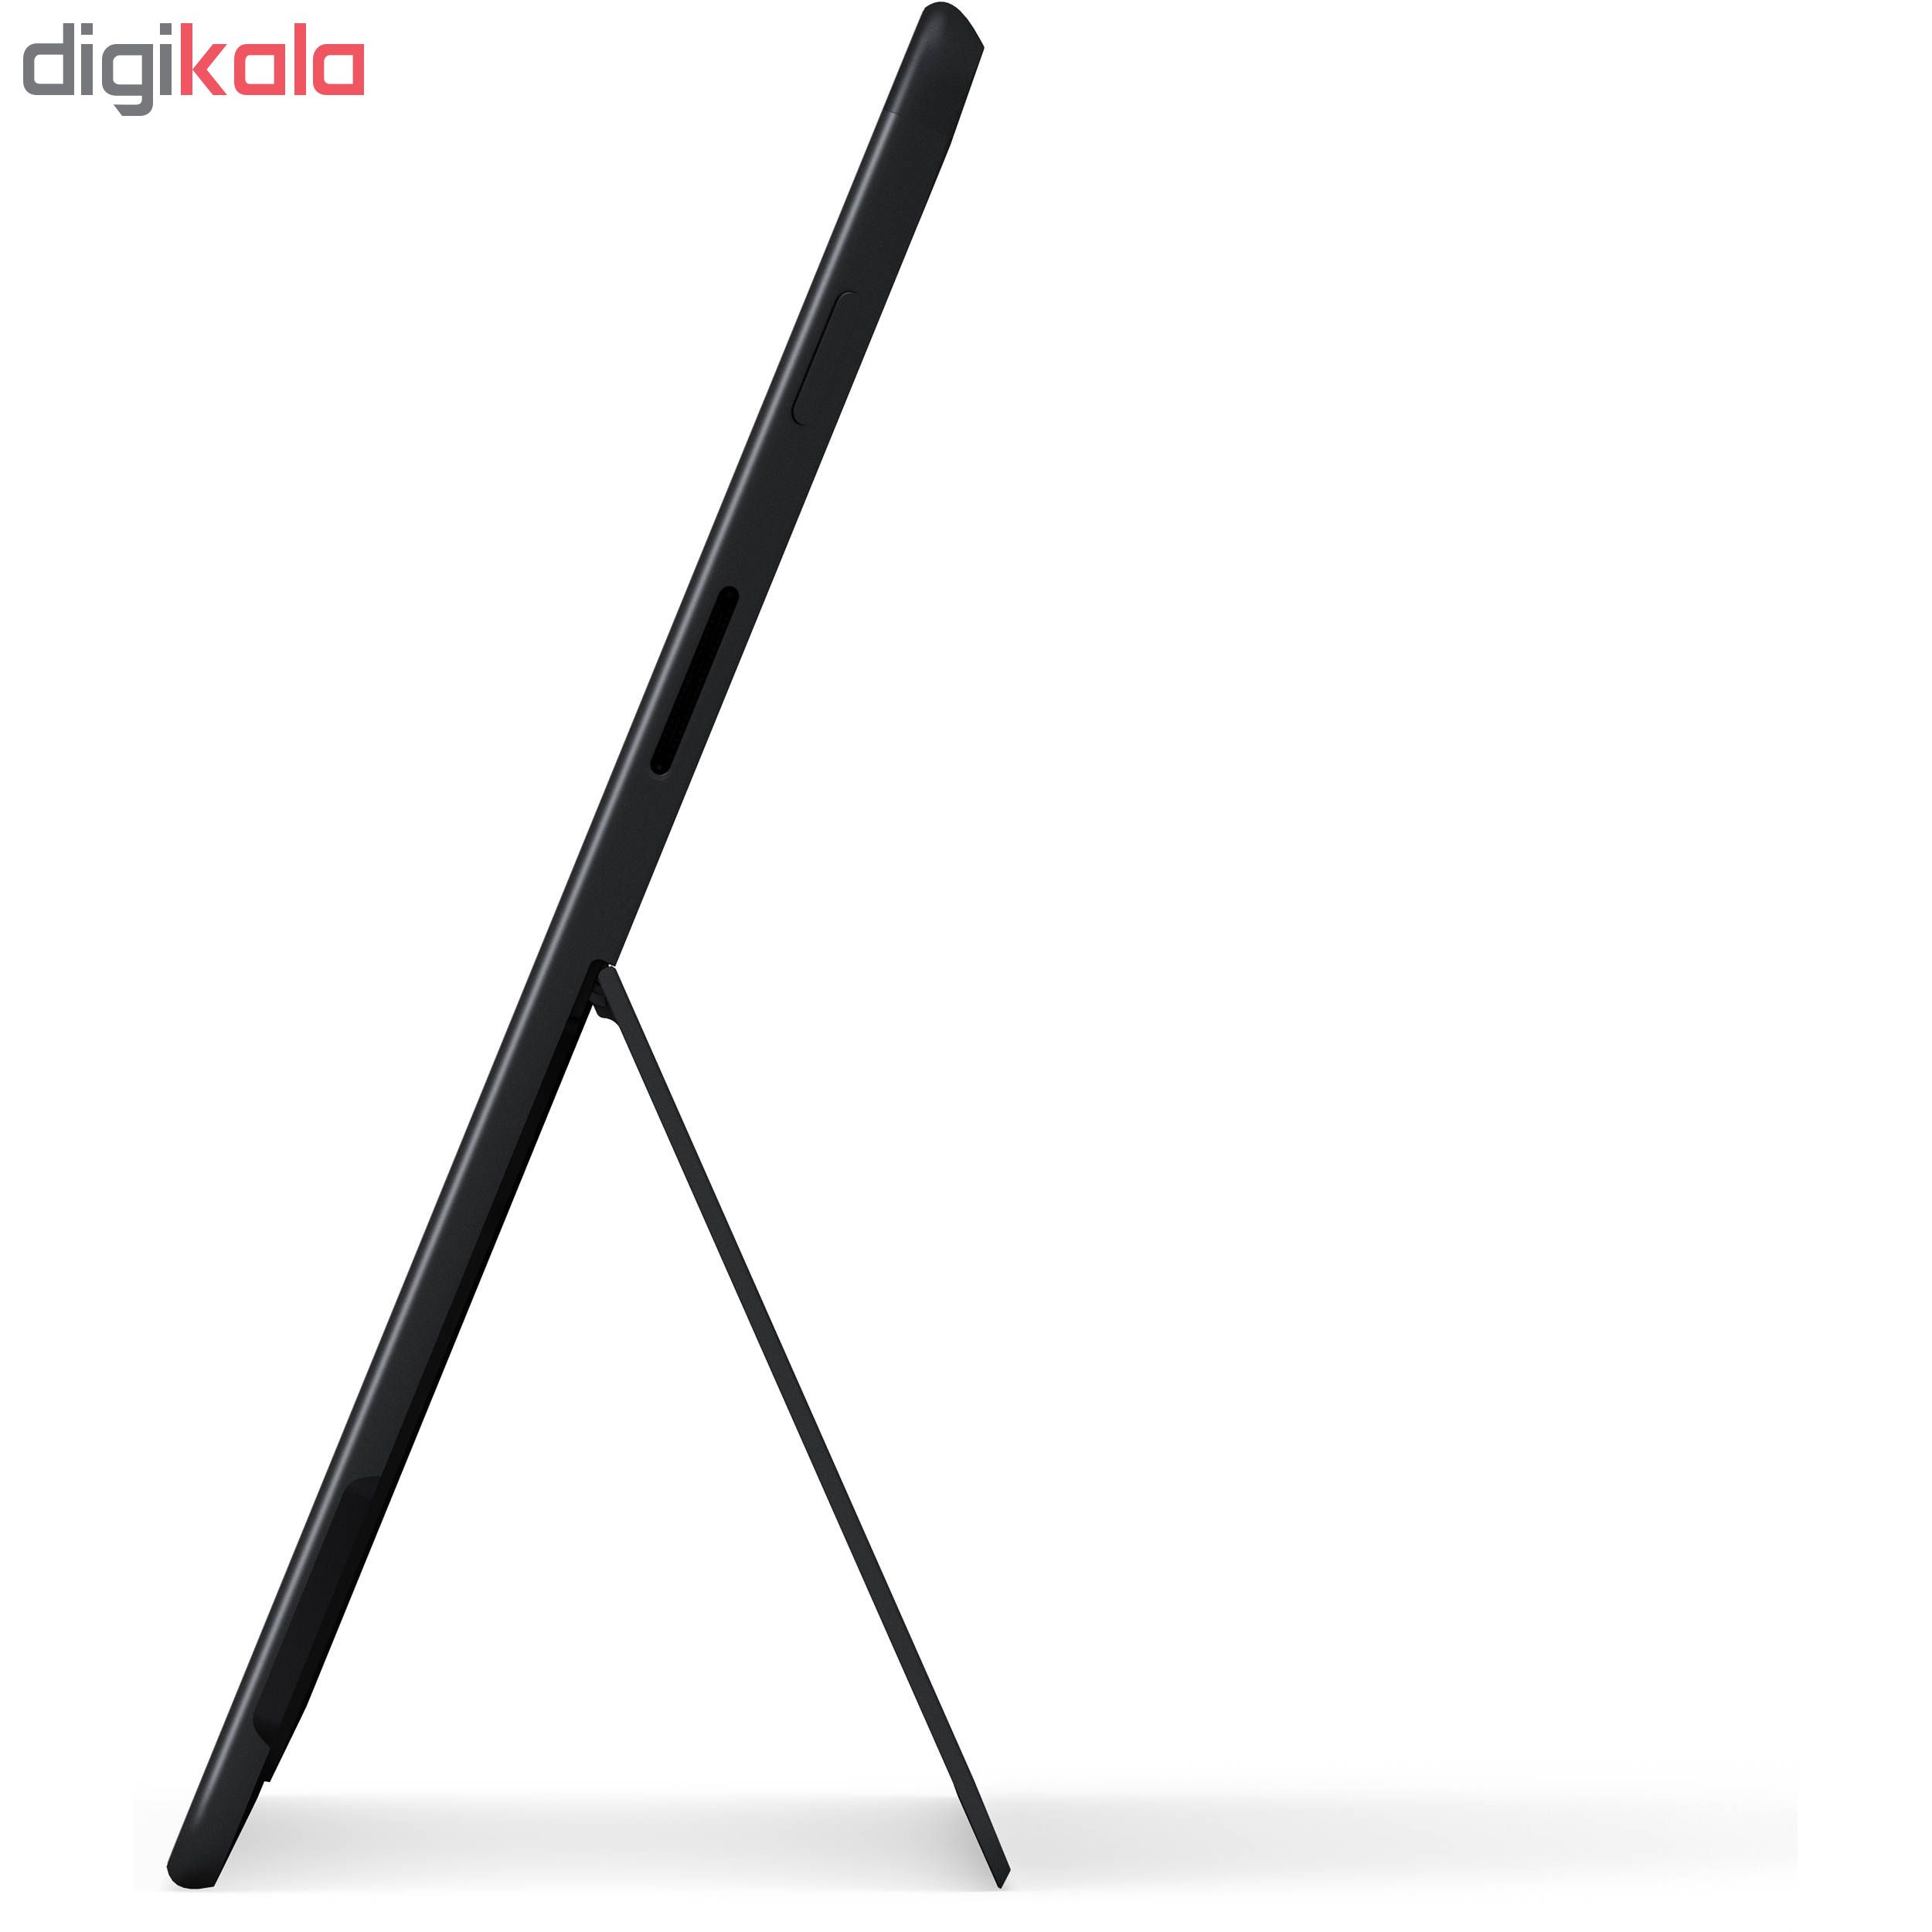 تبلت مایکروسافت مدل Surface Pro X LTE - D ظرفیت 512 گیگابایت